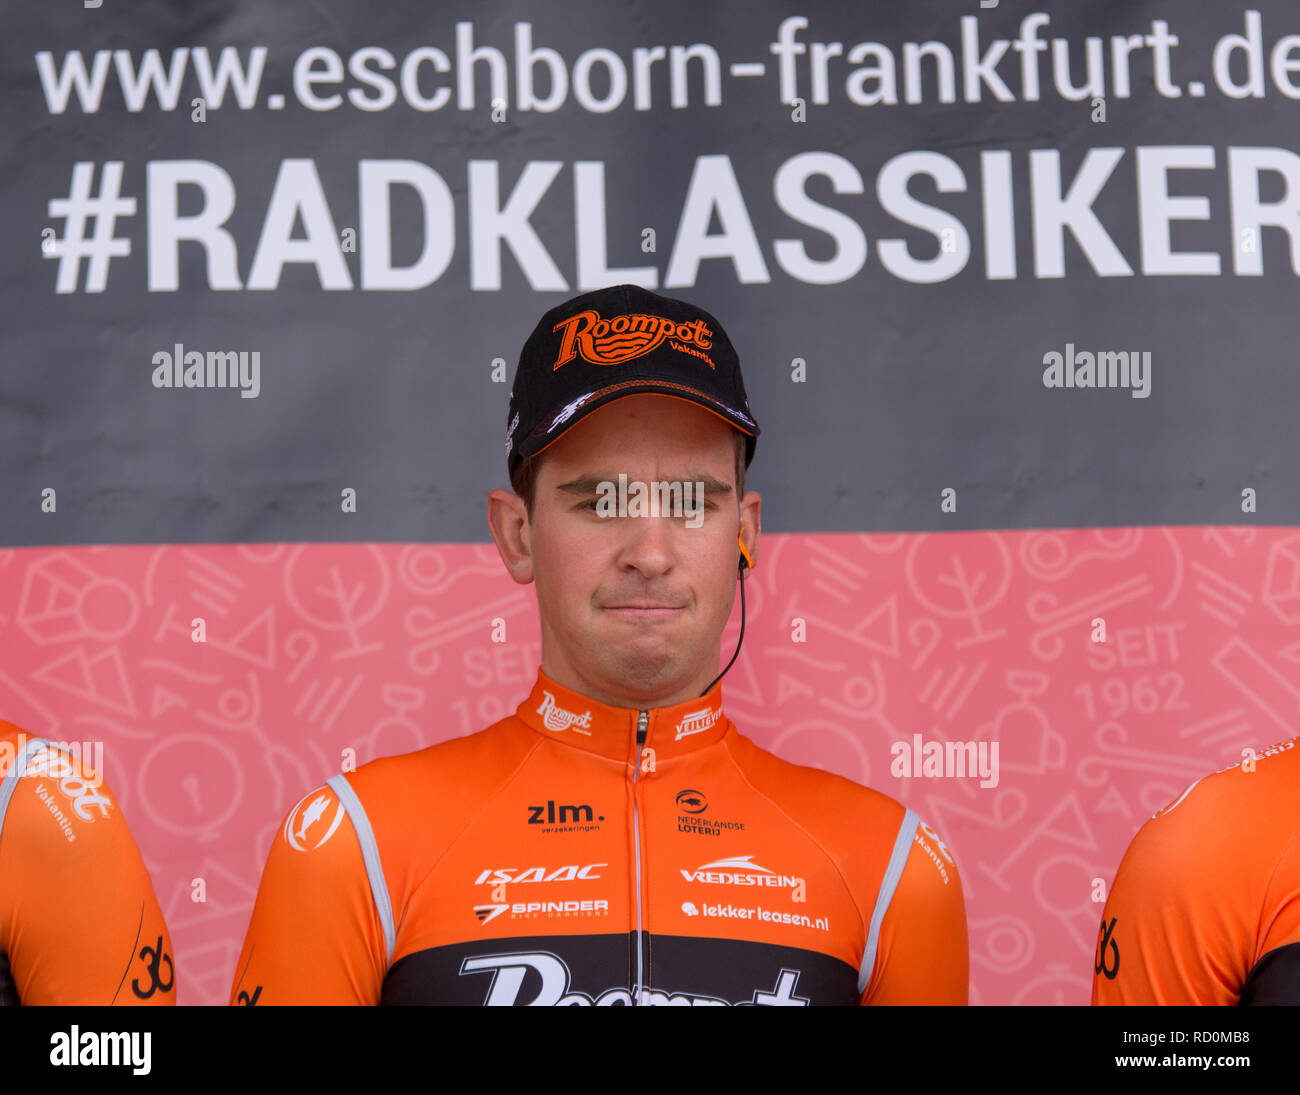 ESCHBORN, GERMANY - MAY 1st 2018: Brian Van Goethem (Roompot-Nederlandse Loterij) at Eschborn-Frankfurt cycling race Stock Photo